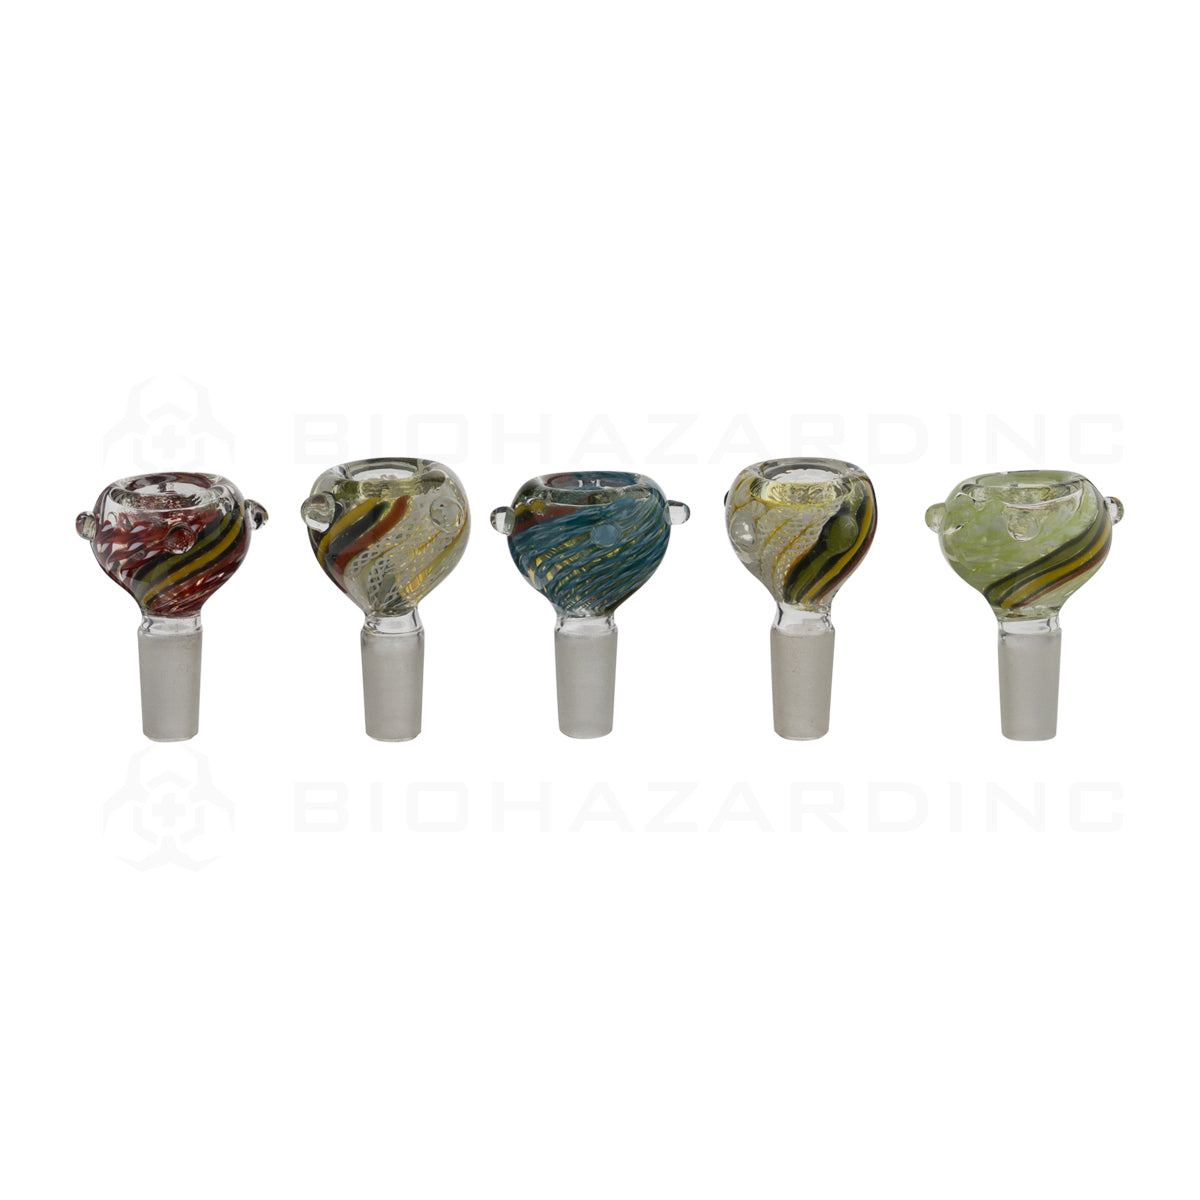 Bowl | Lattichino Striped Glass Bowls | 14mm - Assorted Colors - 5 Count Glass Bowl Biohazard Inc   